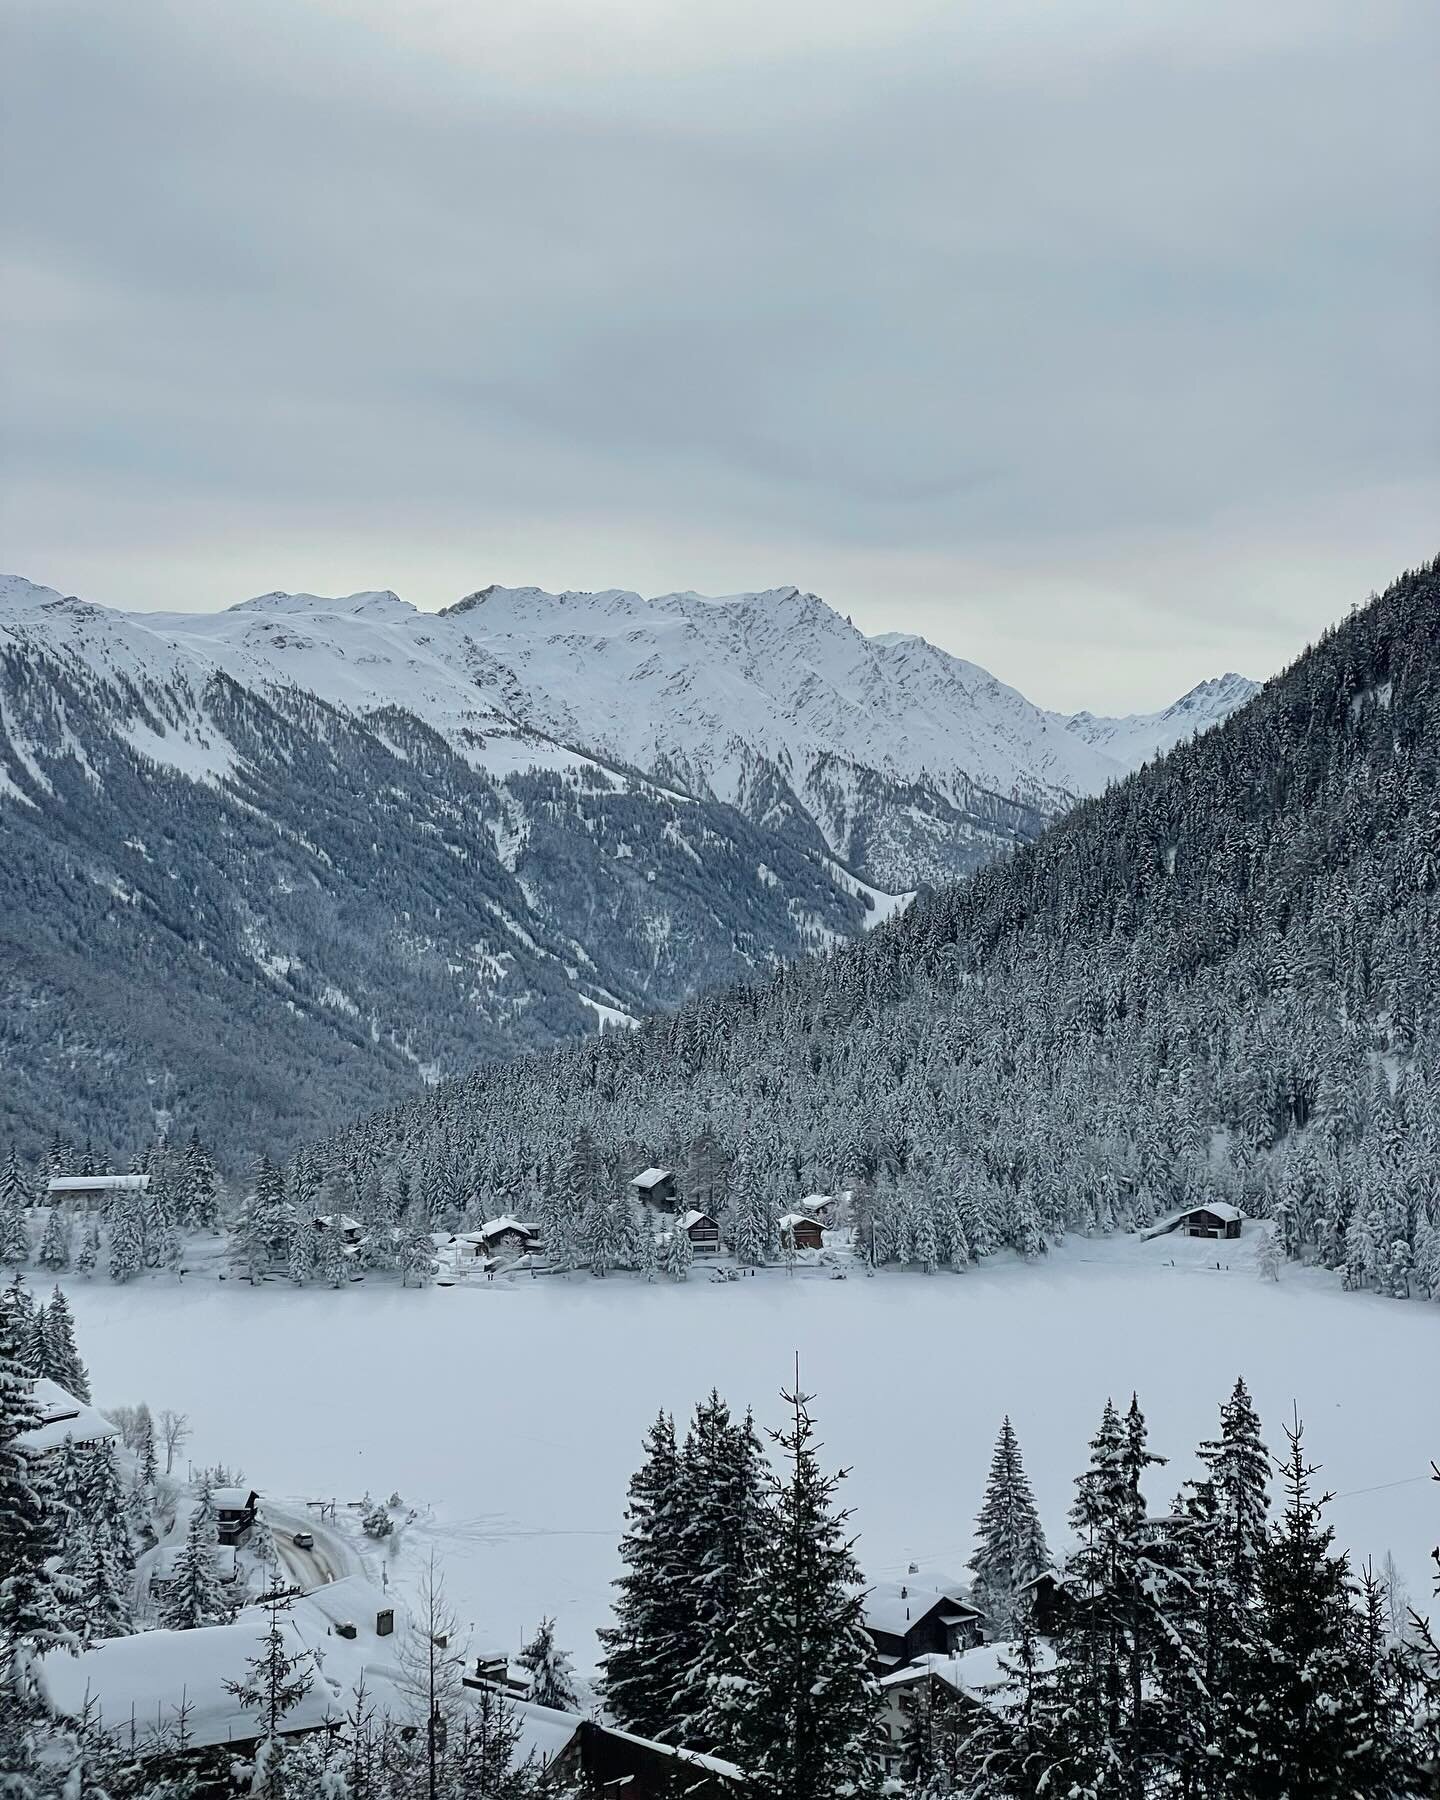 Favorite alpine village 💙
.
.
.
.
#magicalmoments #wintermood #frozenlake #monhiverenvalais #valaisgravedansmoncoeur #switzerlandwonderland #alpinelakes #lasuisse #alpinevillage #mountaintown #lakesandmountains #alpineliving #mountainlifestyle #moun